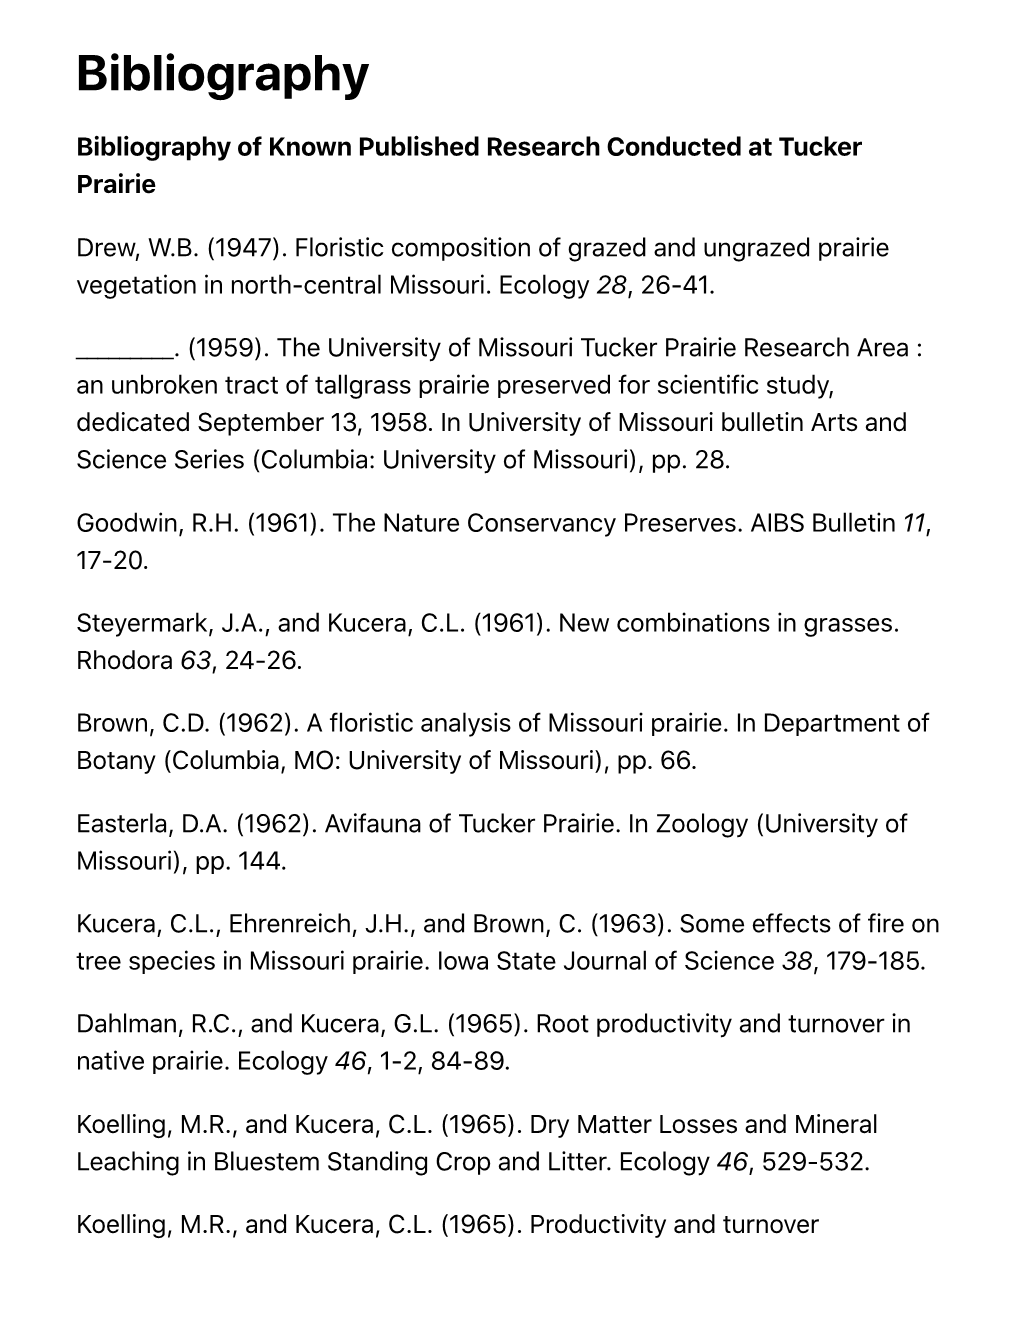 Bibliography | Tucker Prairie | Clair L. Kucera Research Station